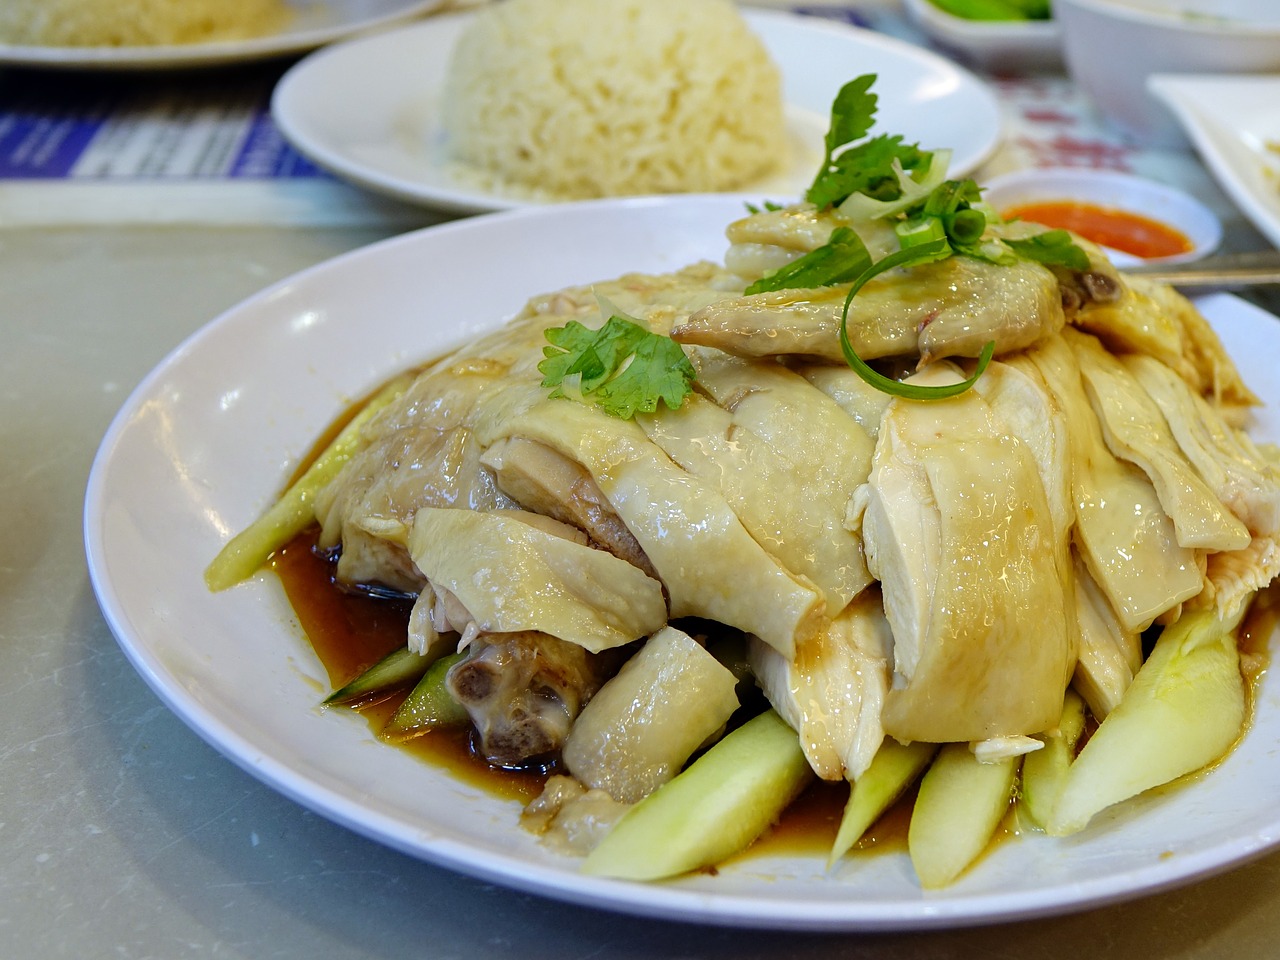 Schlotzsky's Asian Chicken Wrap